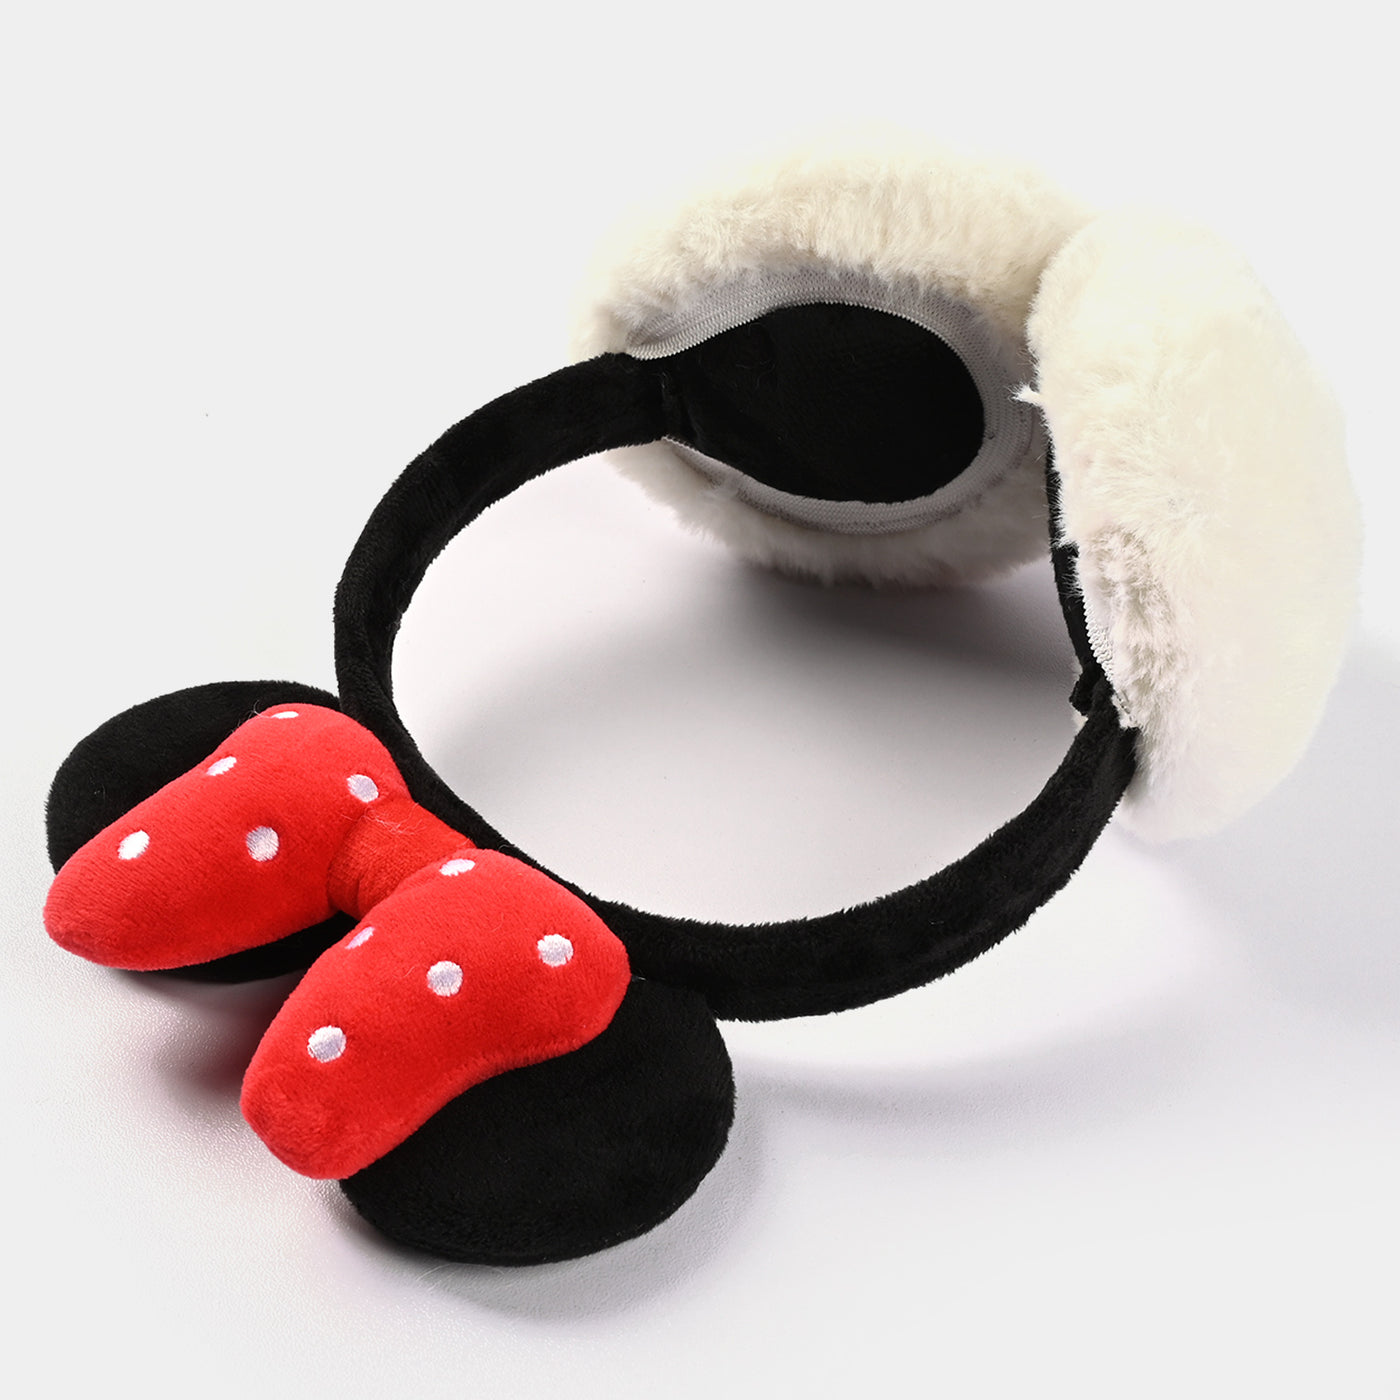 Stylish & Protective Earmuff For Kids